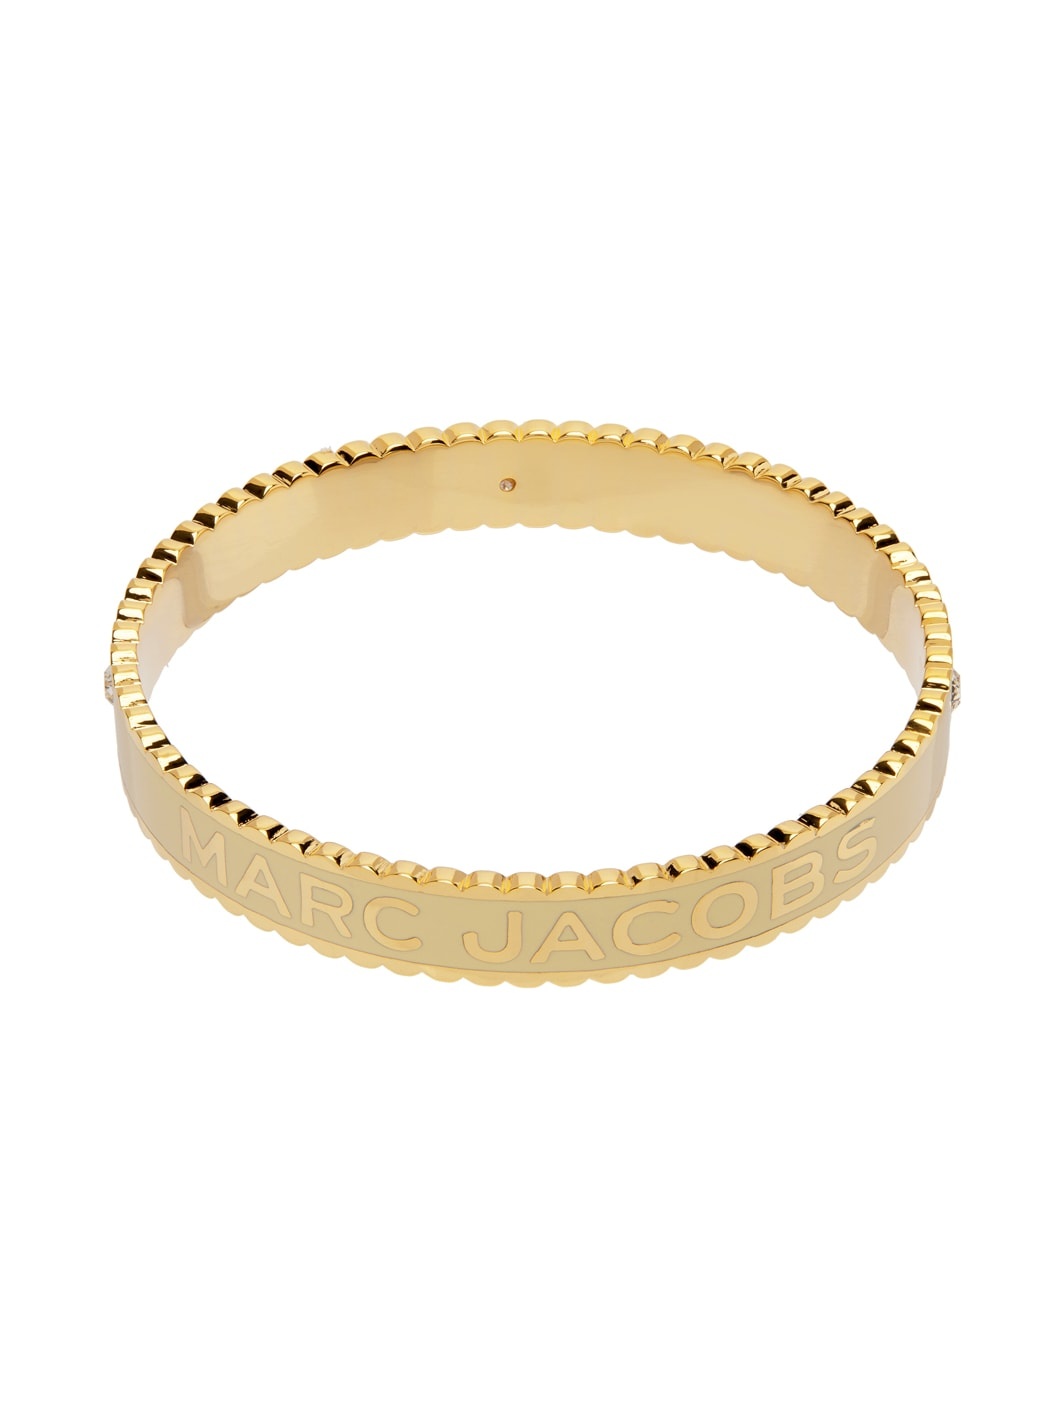 Gold & White 'The Medallion' Cuff Bracelet - 2